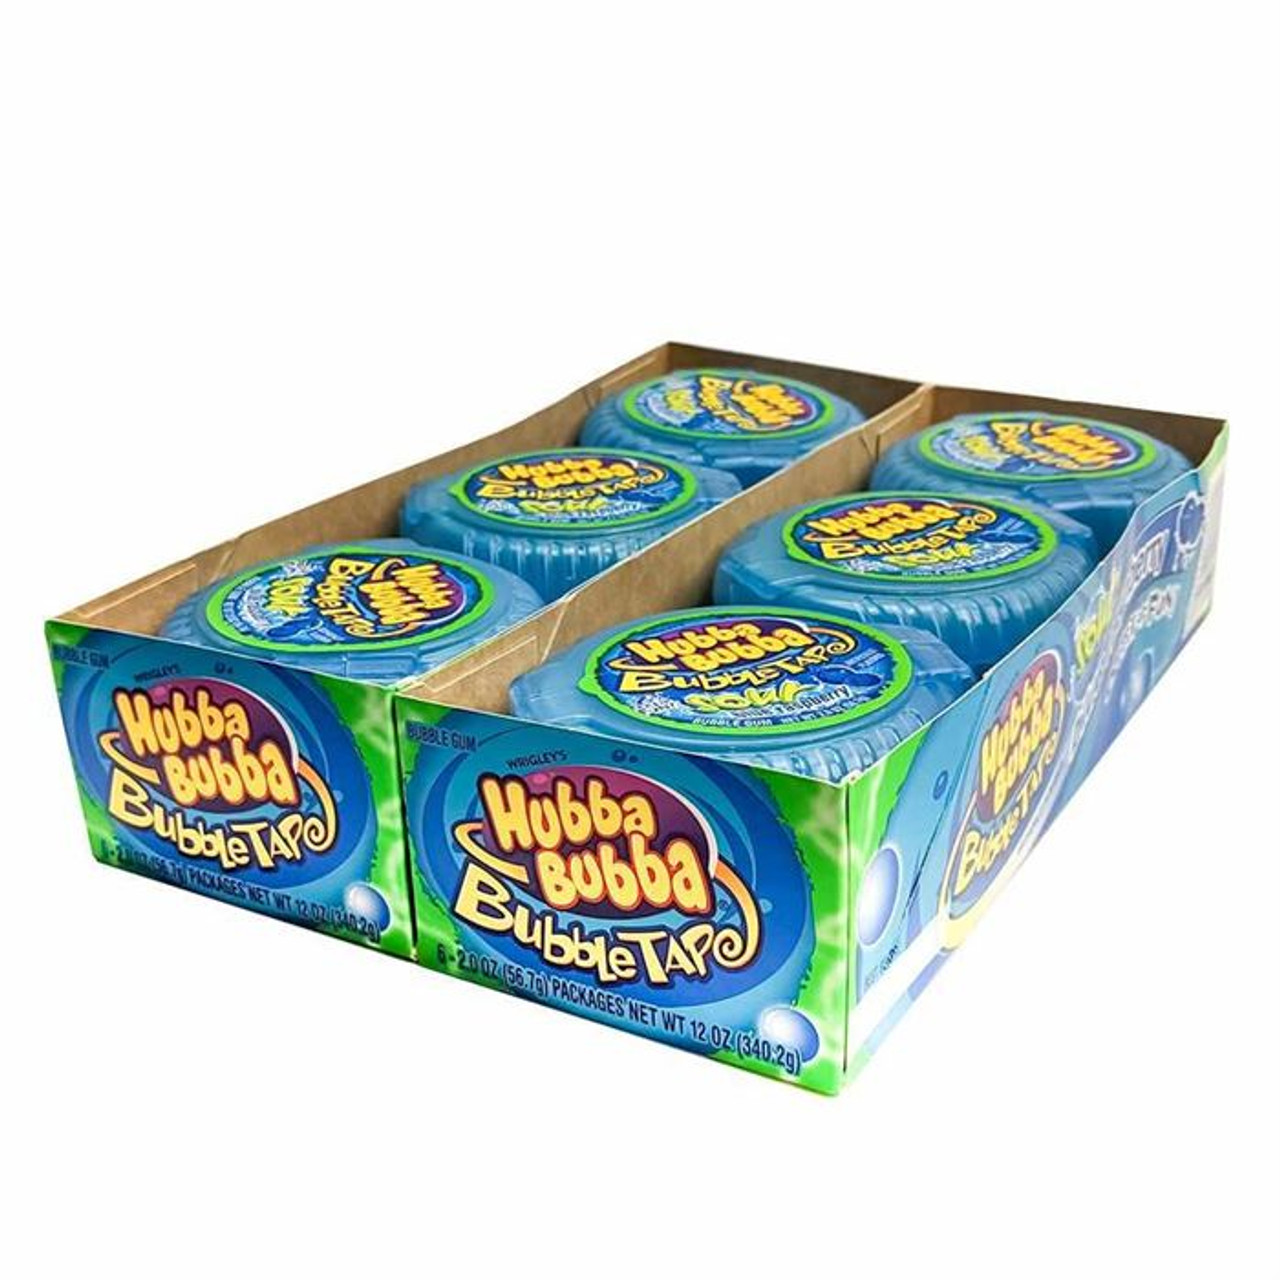 HUBBA BUBBA Original Bubble Gum Bulk Pack, 2 oz Tape (Pack of 6)